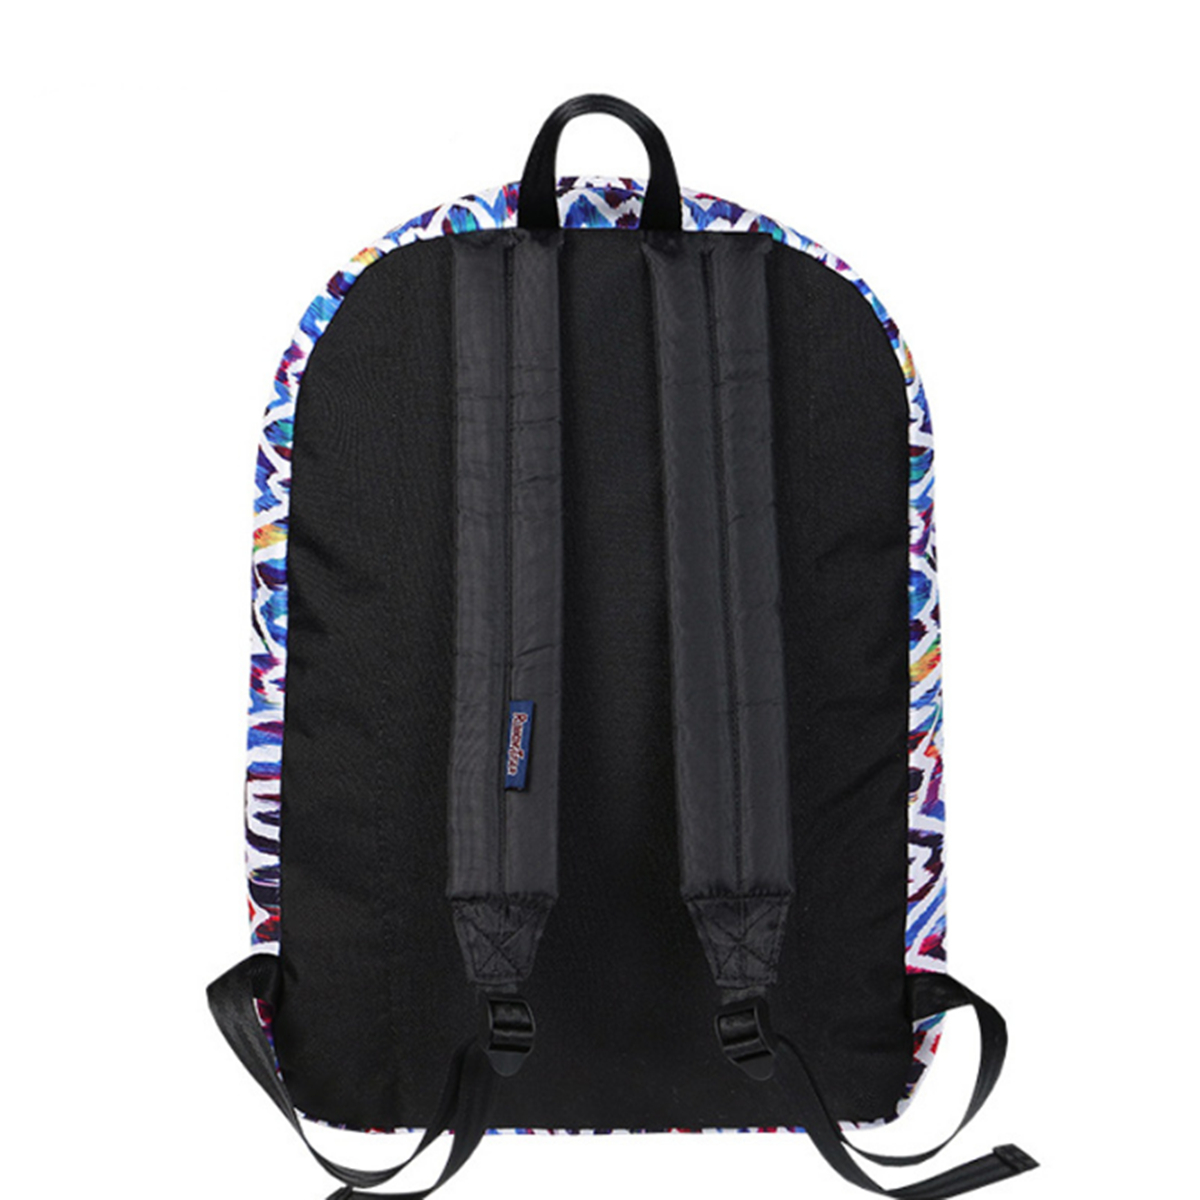 Outdoor-Backpack-Girl-School-Bag-Women-Laptop-Bag-Travel-Camping-Bag-1585844-9